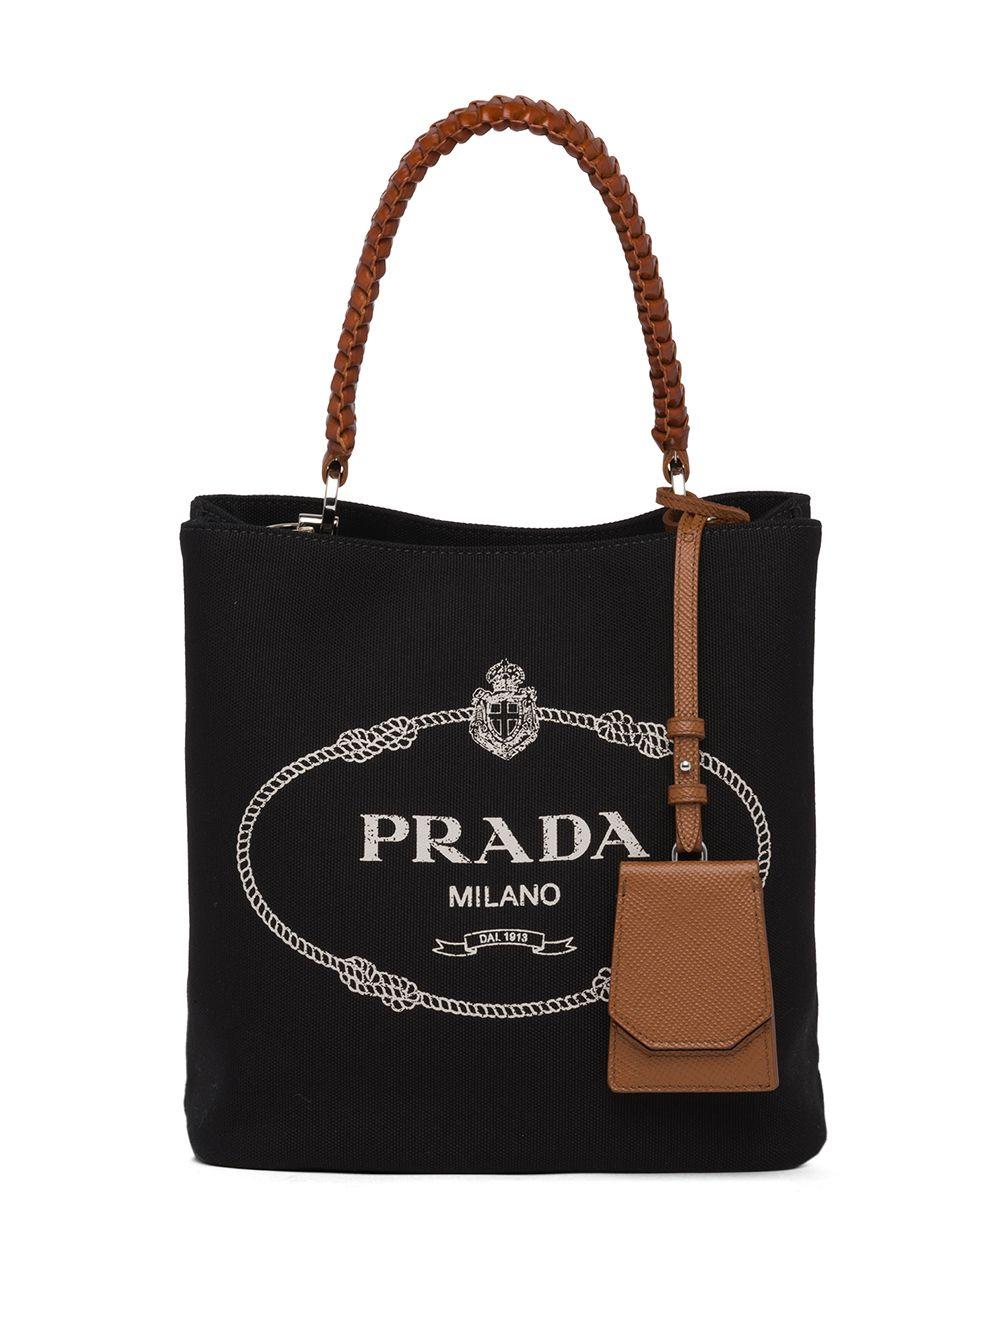 Prada Small Panier Canvas Bag in Black - Lyst